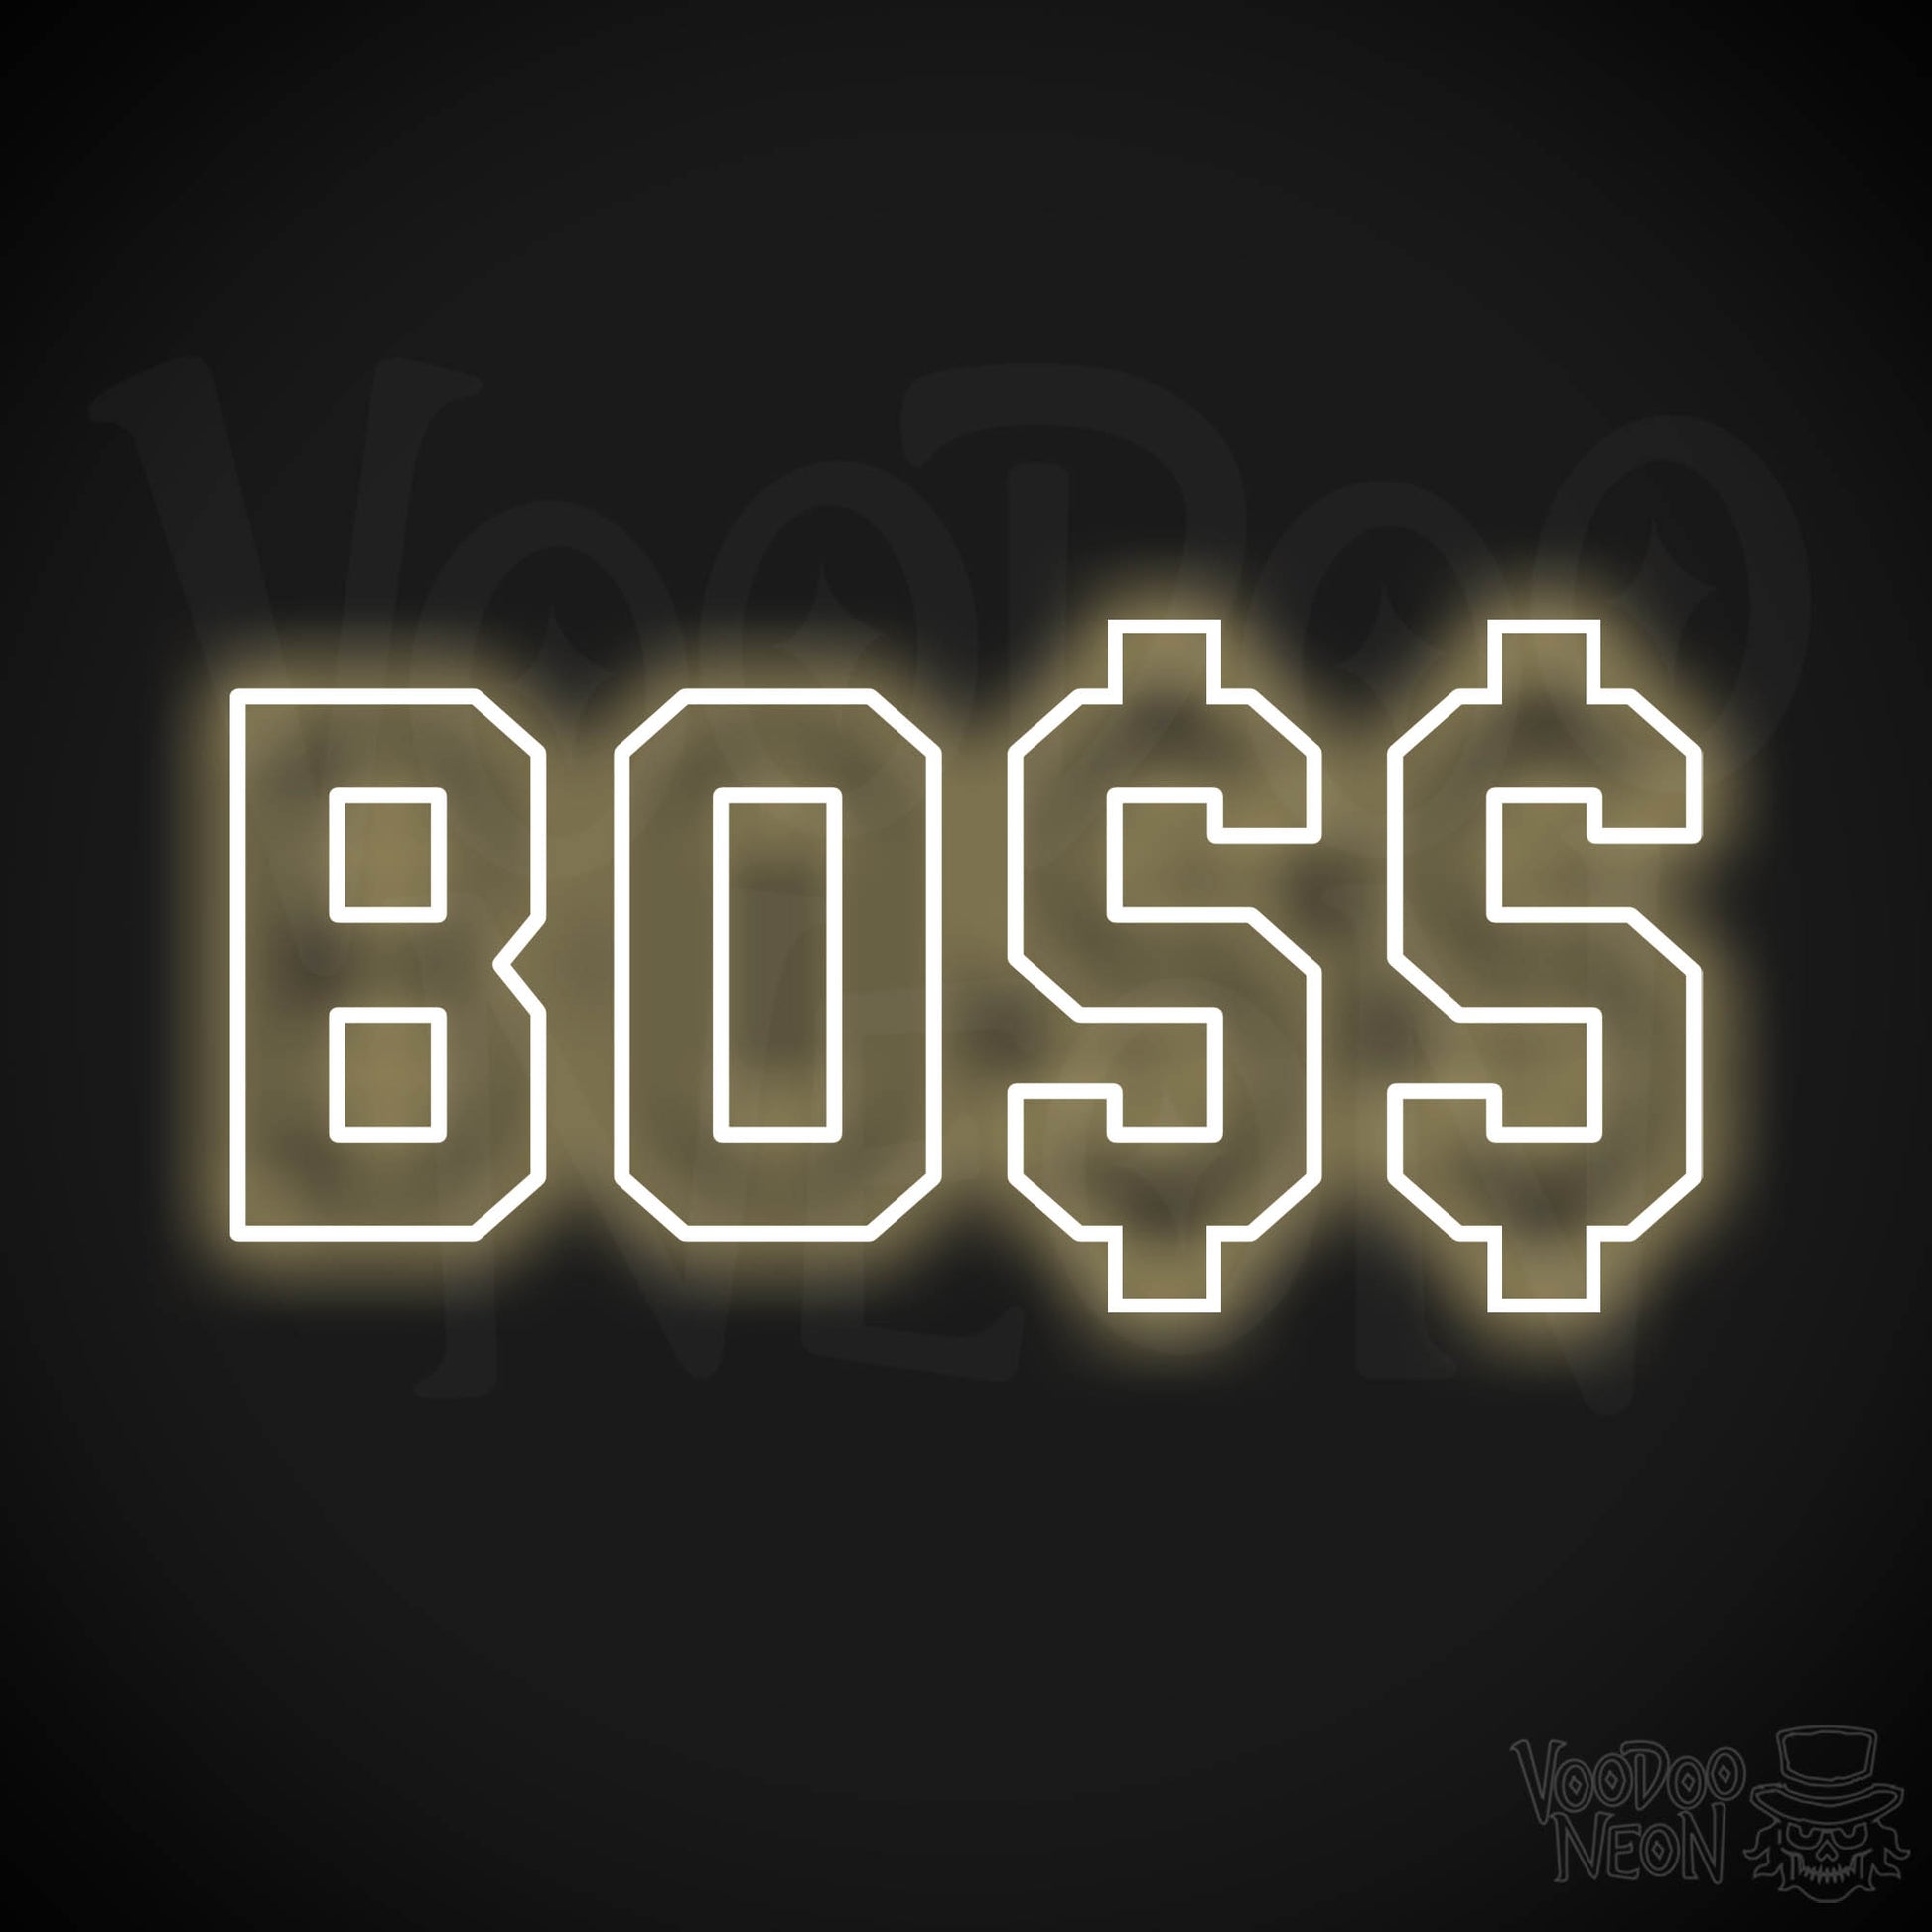 Boss LED Neon - Warm White